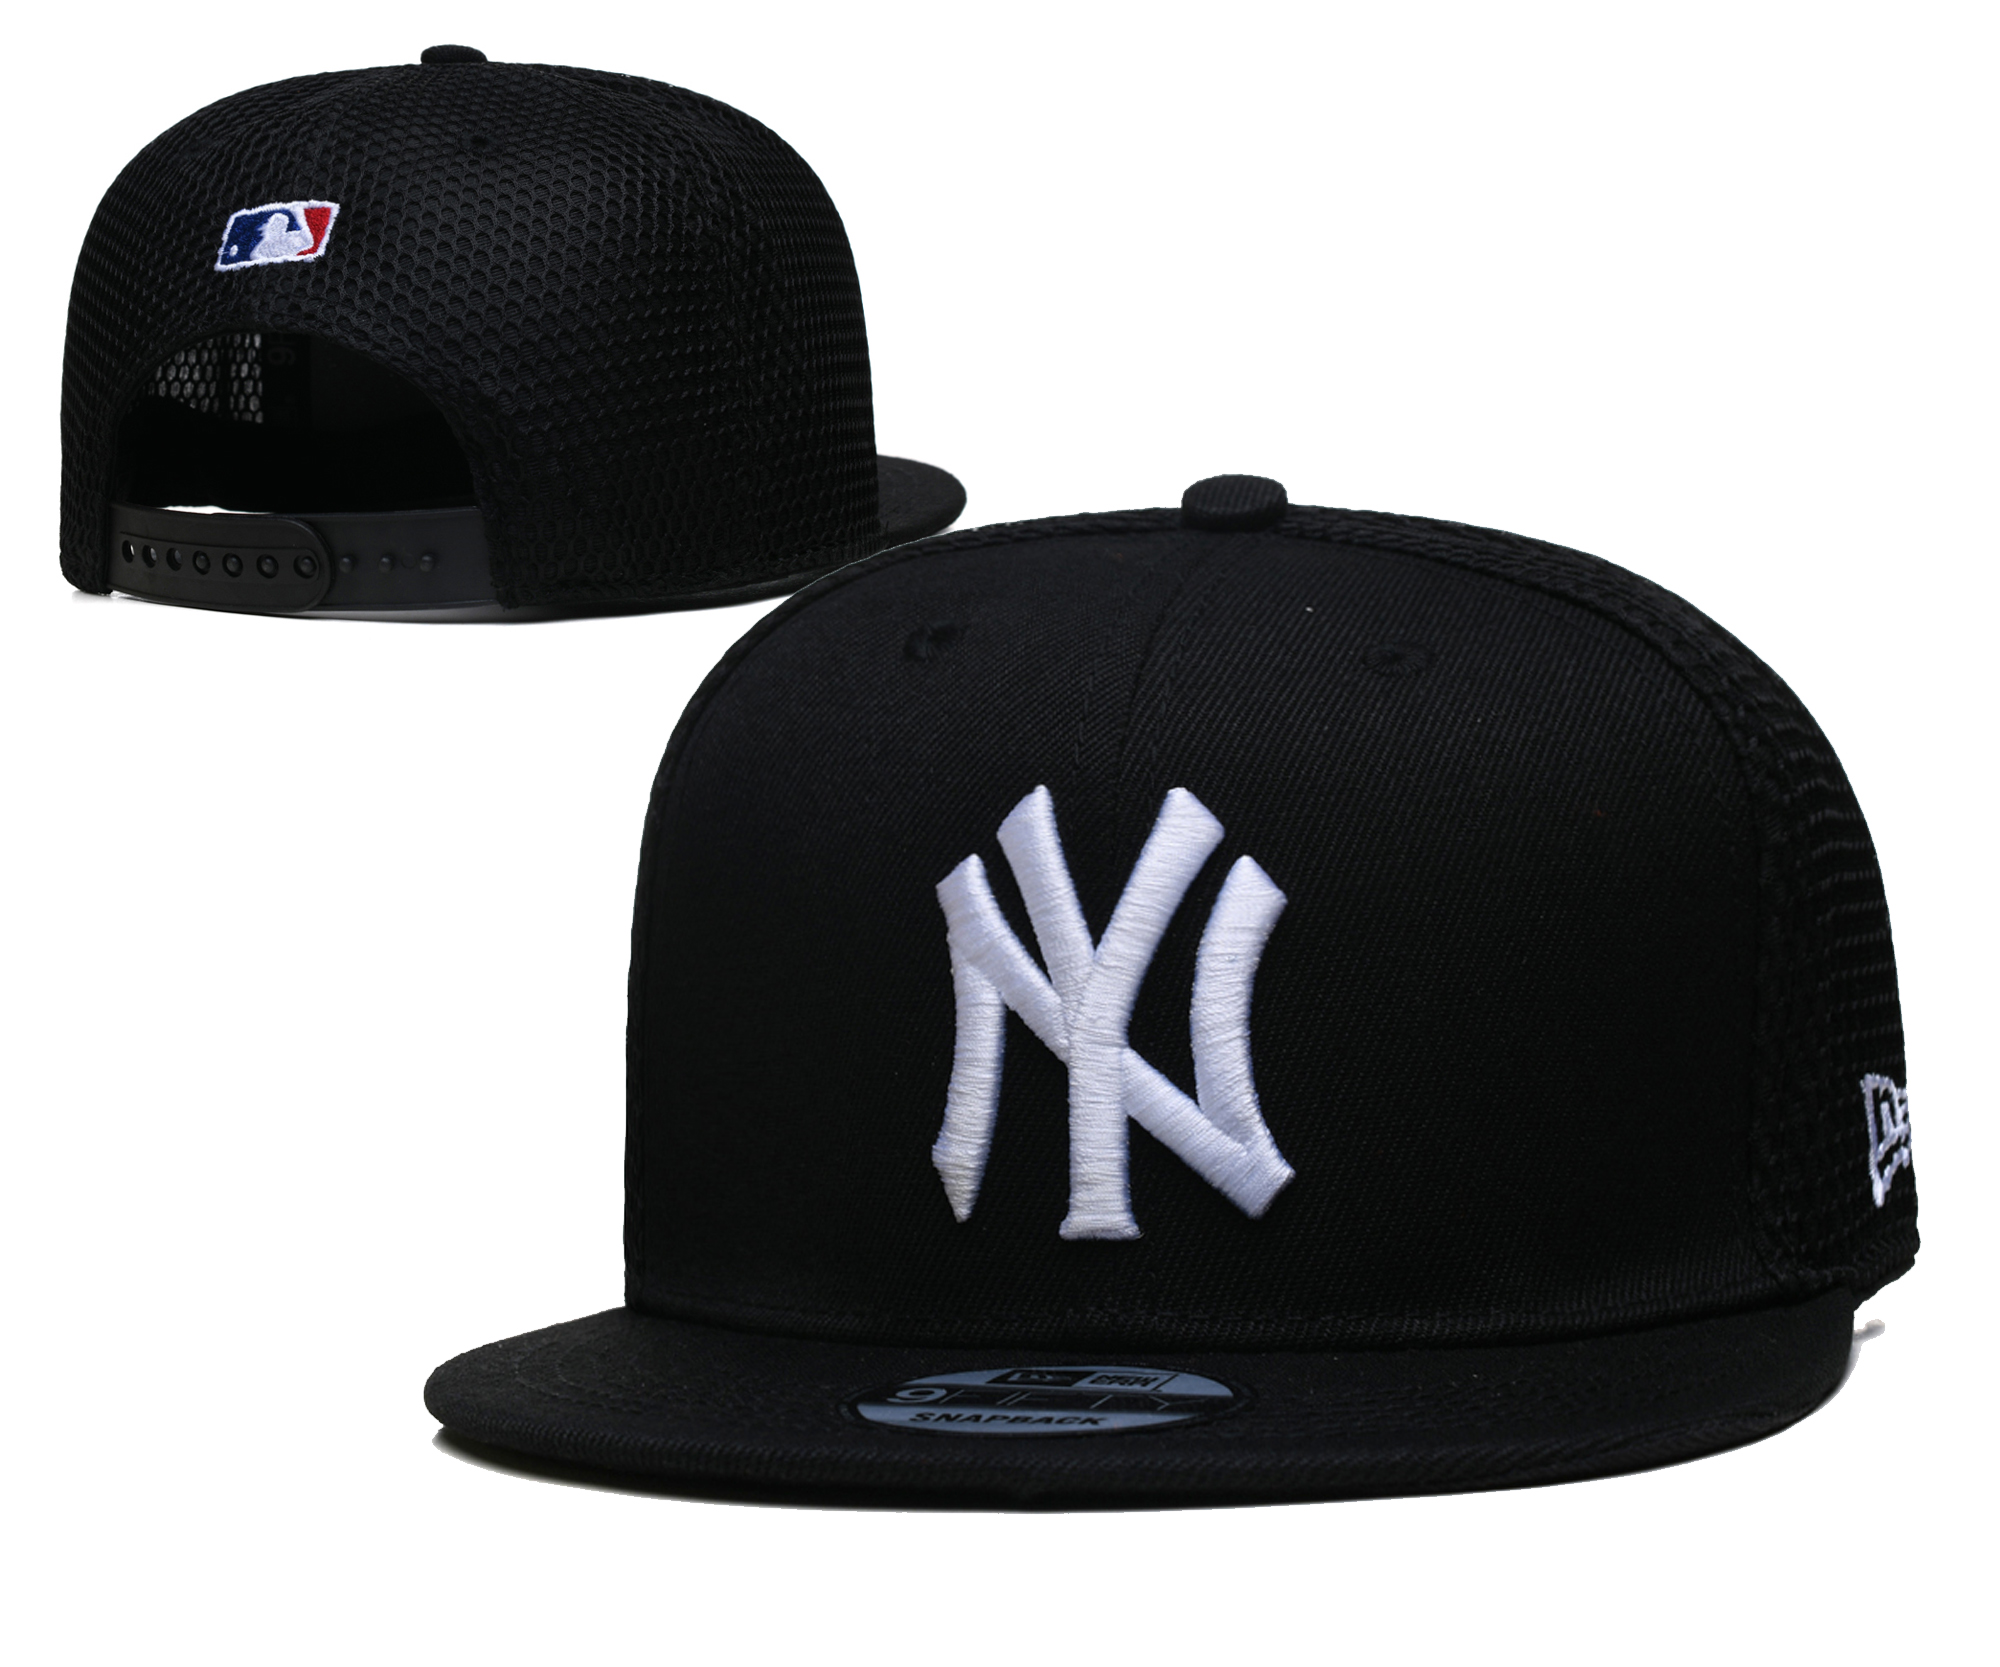 2021 MLB New York Yankees #27 TX hat